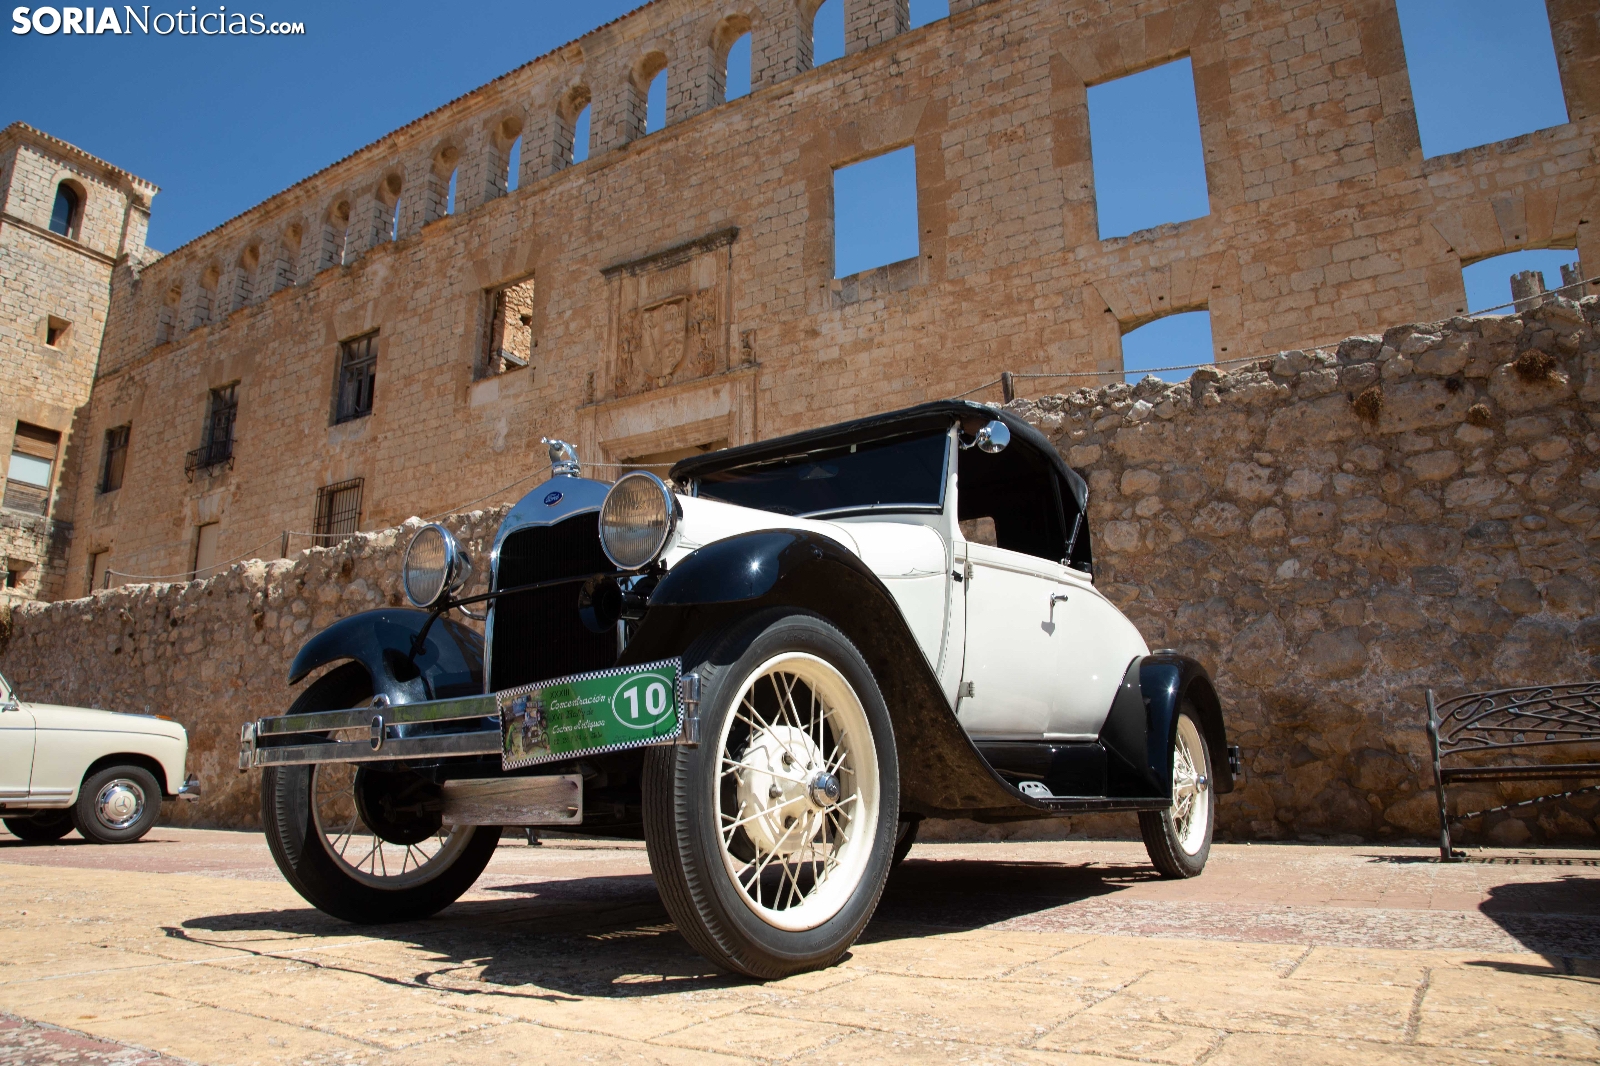 37 coches antiguos ponen fin a su aventura soriana Berlanga de Duero - SoriaNoticias